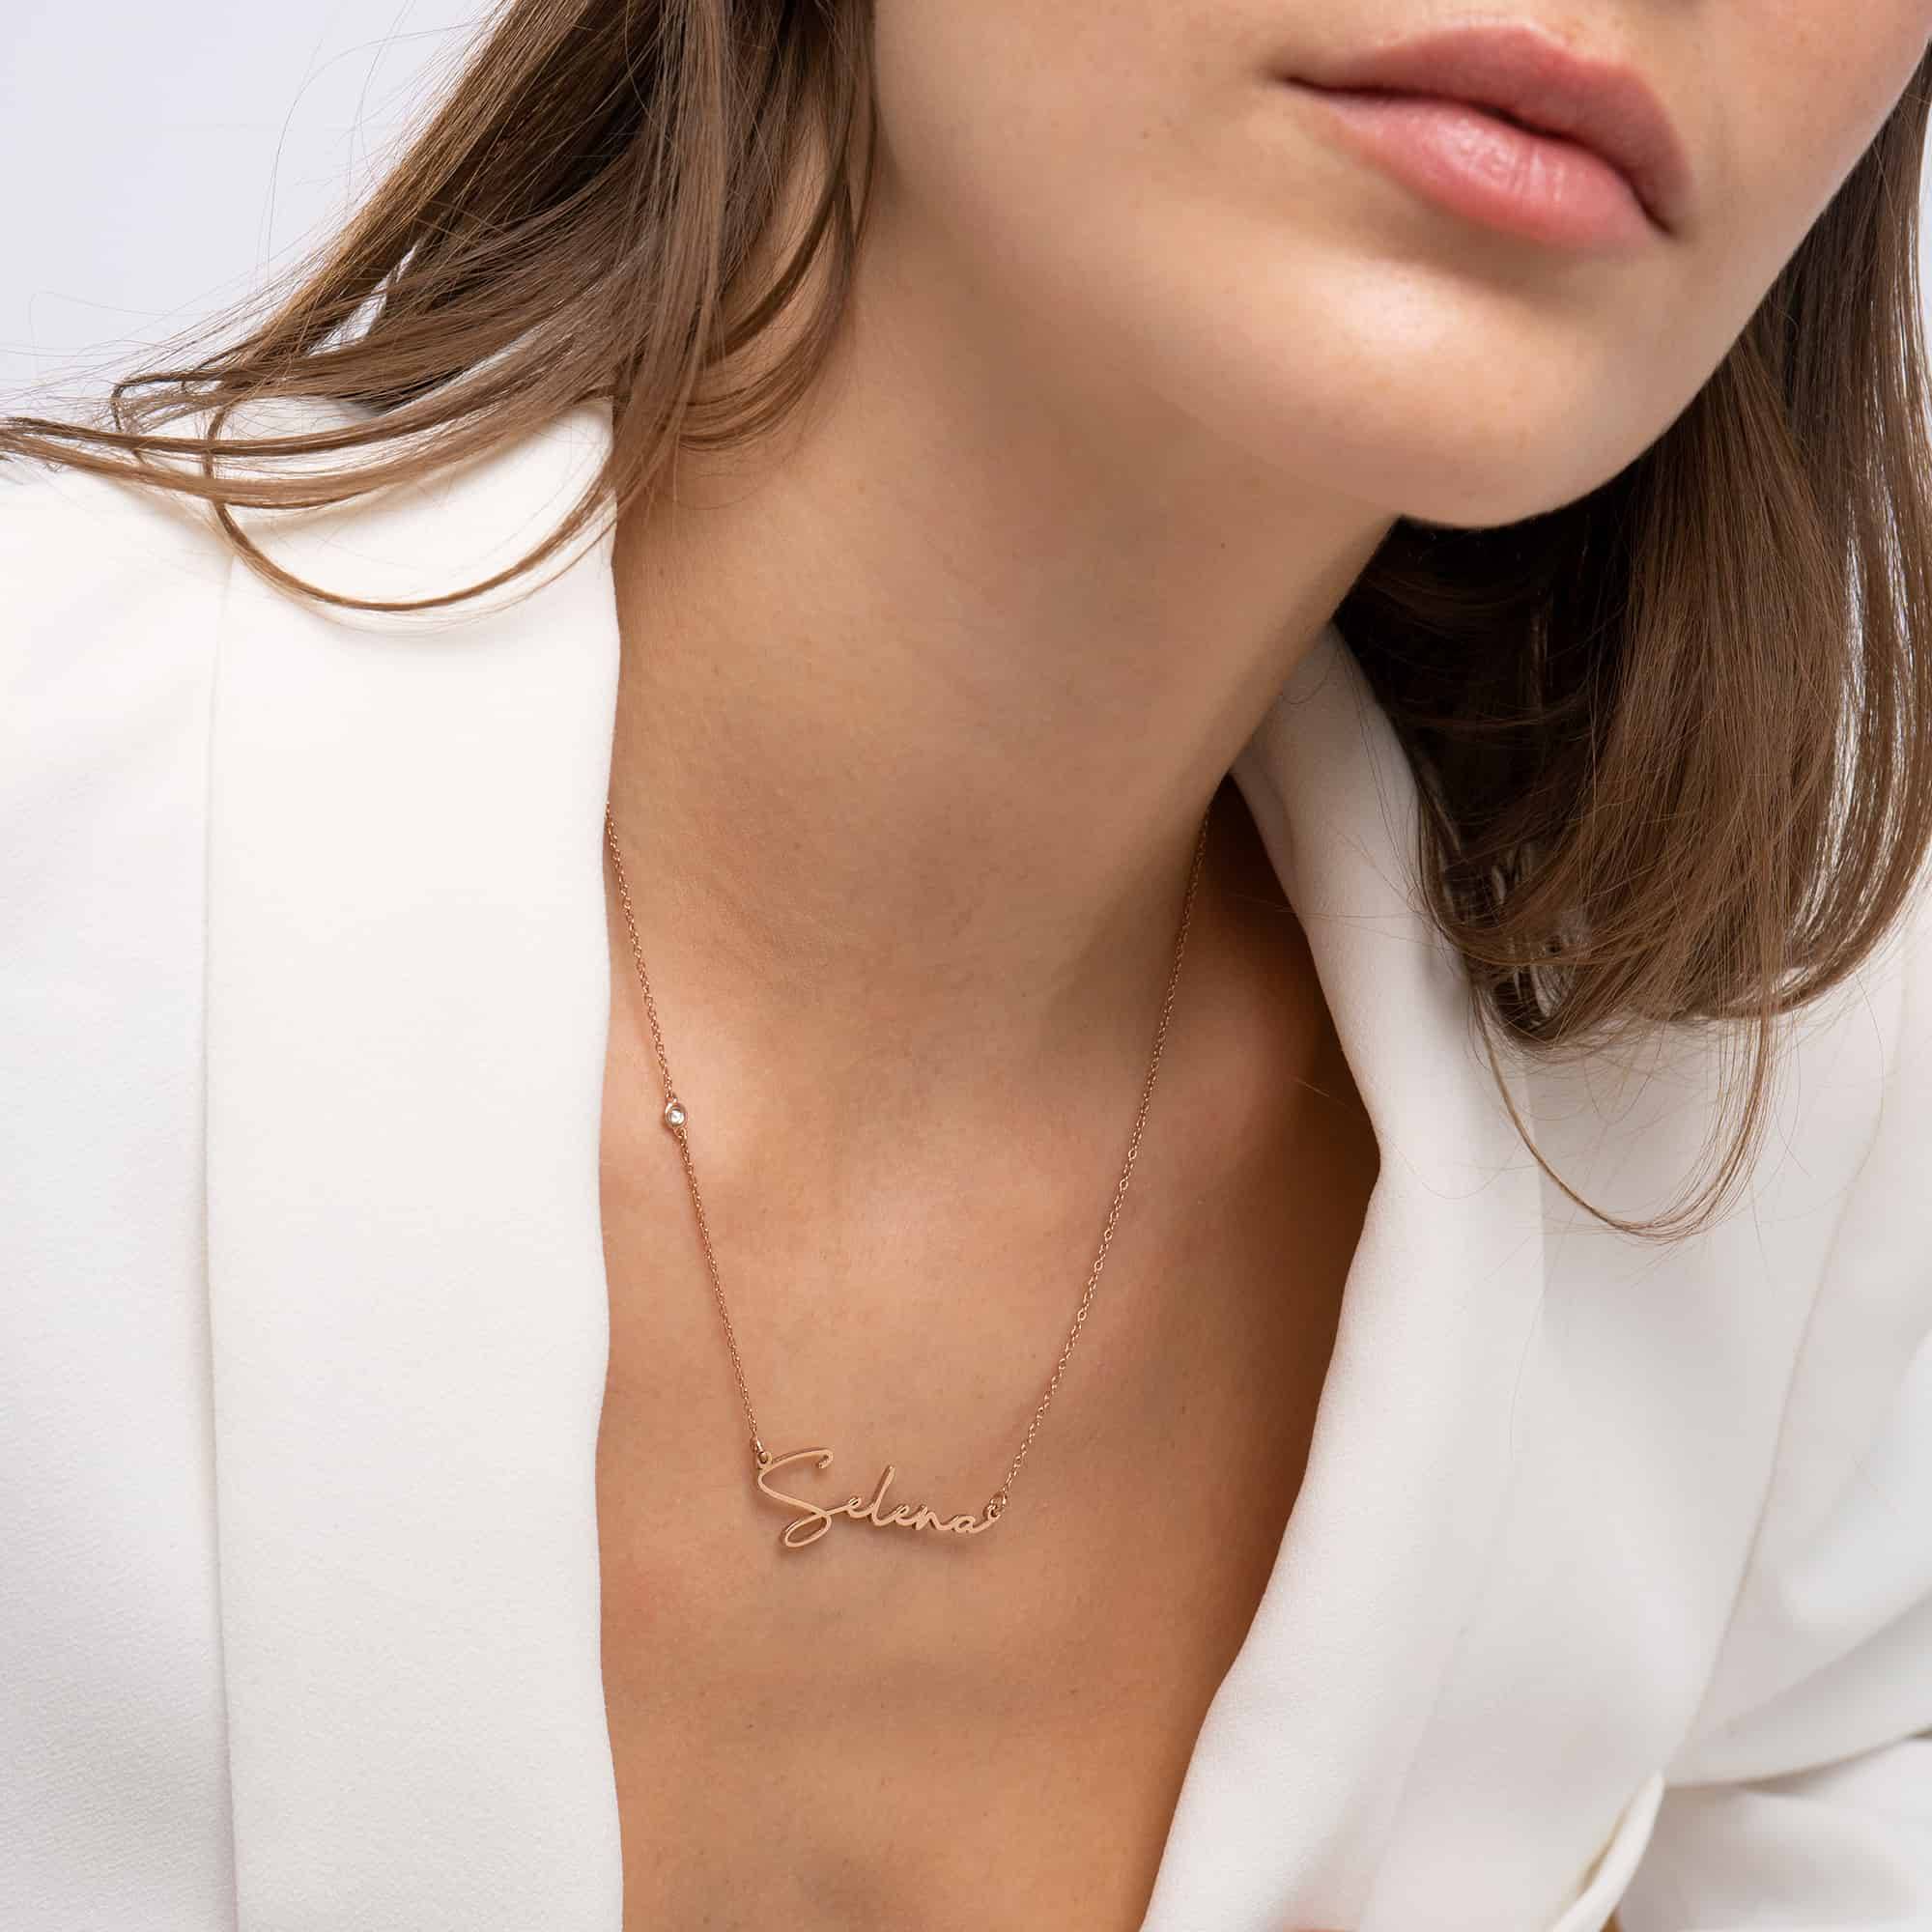 Paris Name Necklace with Diamonds - Rose Gold Vermeil-1 product photo